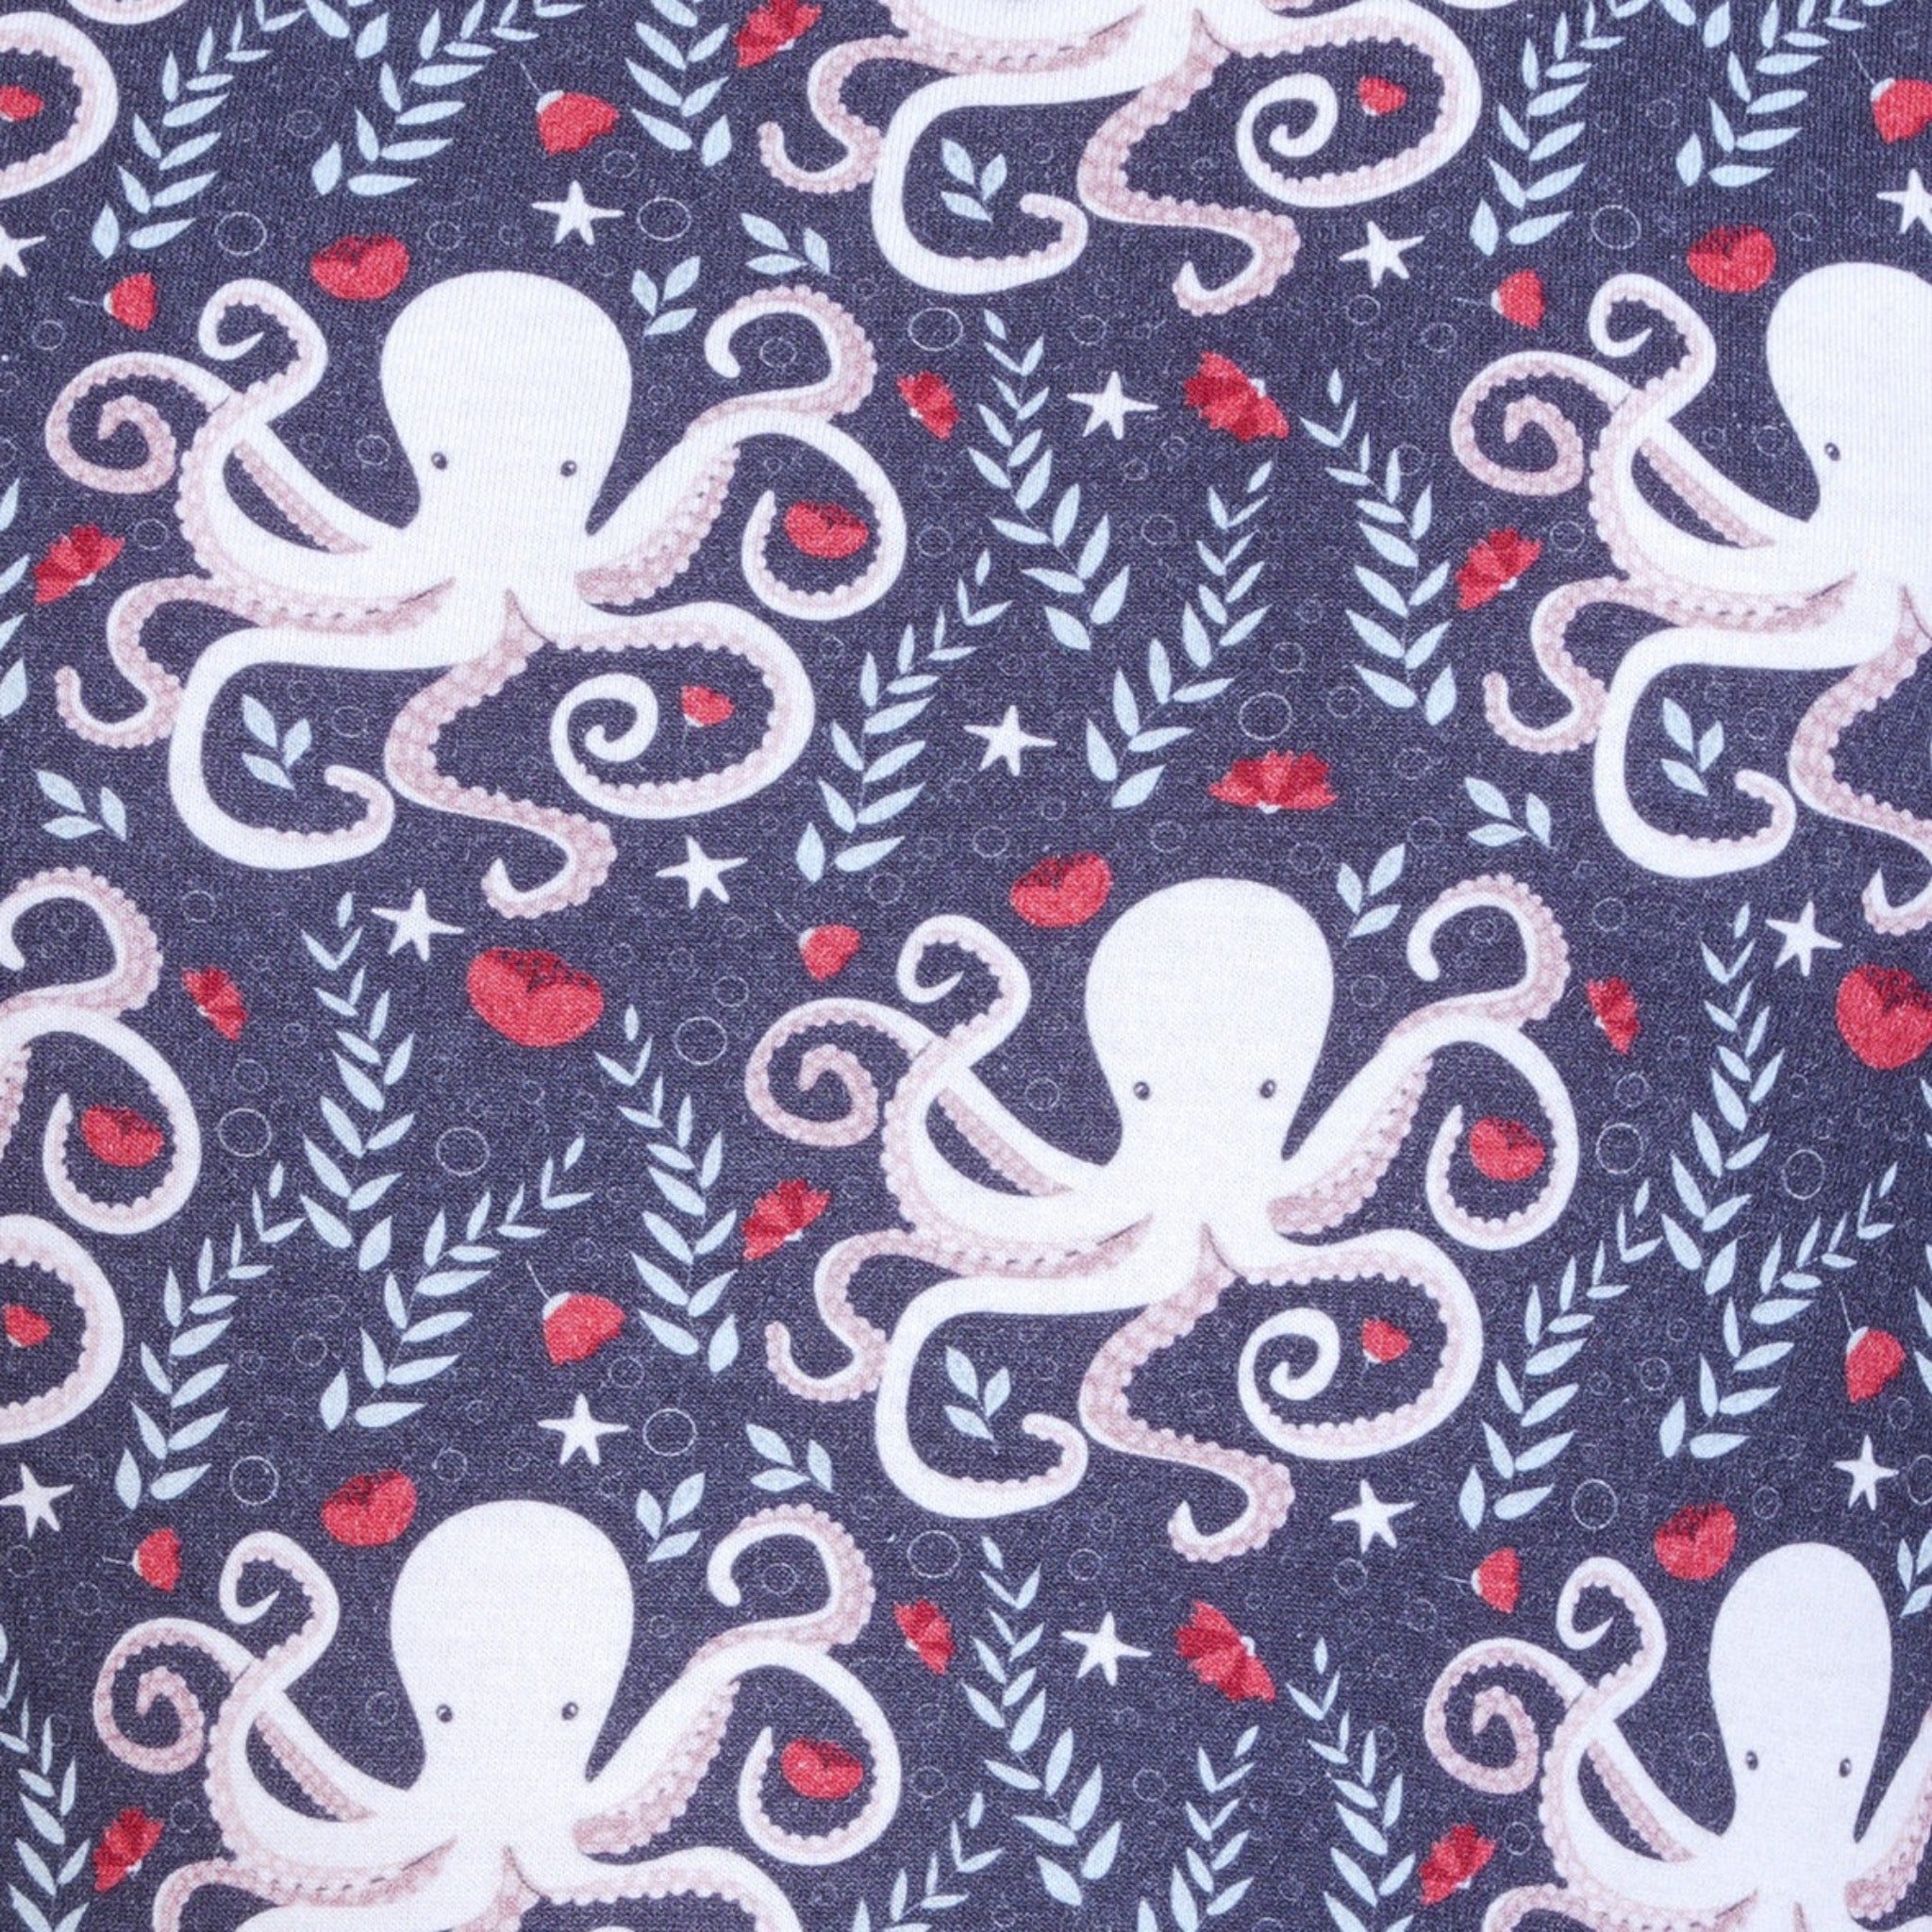 (Pre-order) Floral Octopus Radia Dress